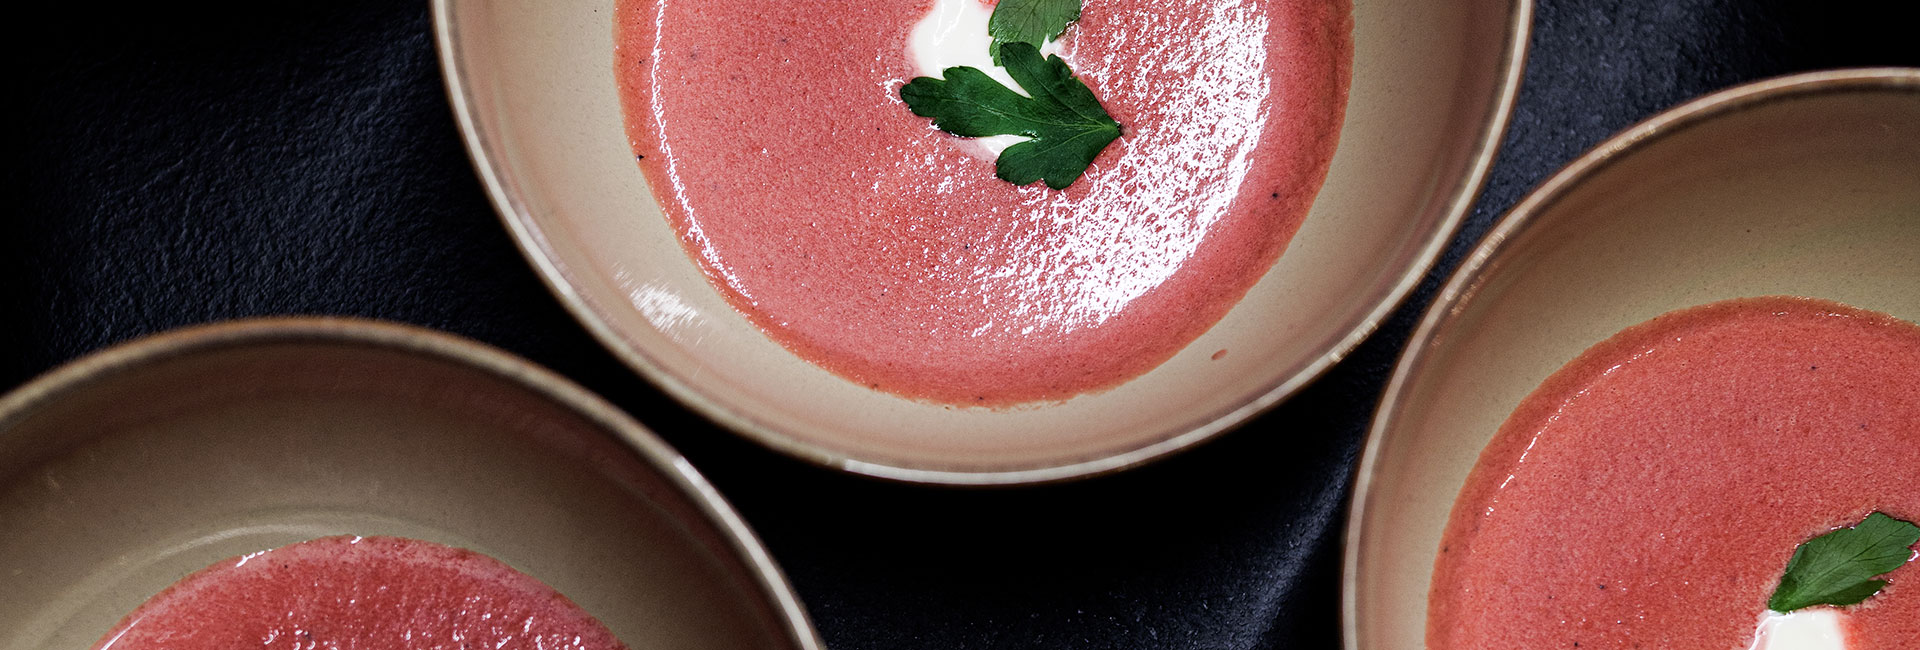 Suppe - Rote Beeten - Saisonale Küche